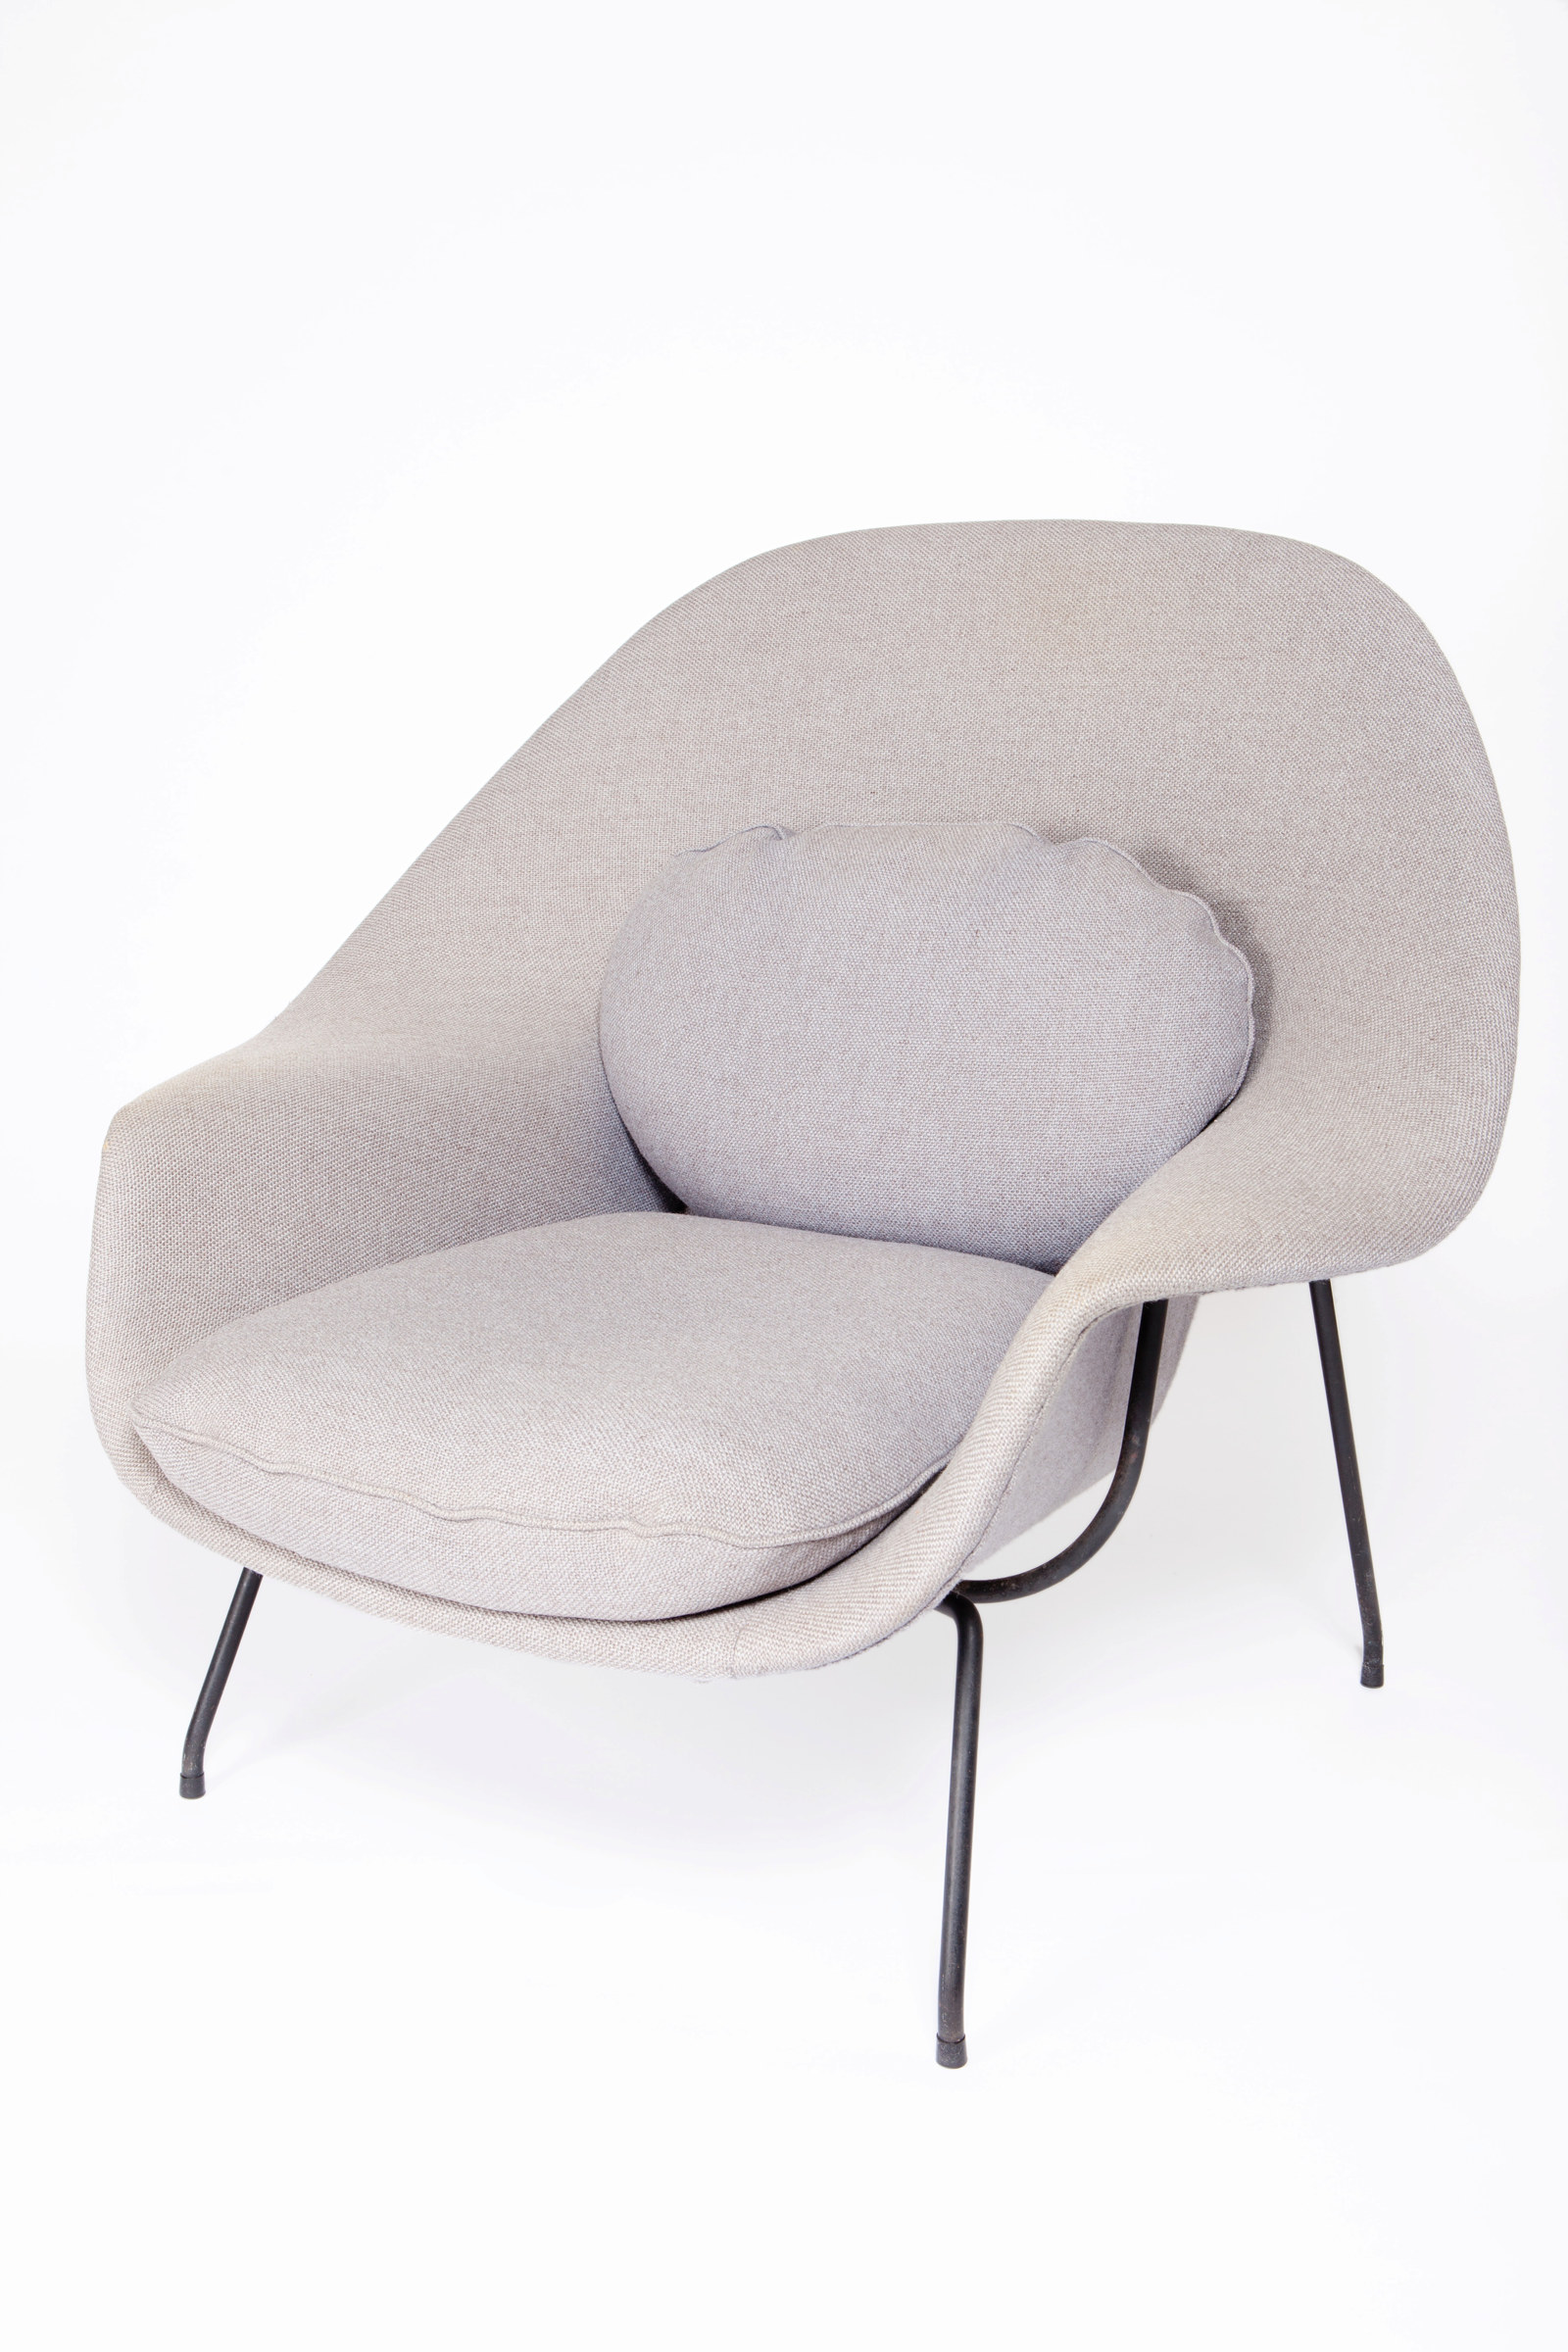 'Womb' chair, design by Eero Saarinen for Knoll International, USA, c1948